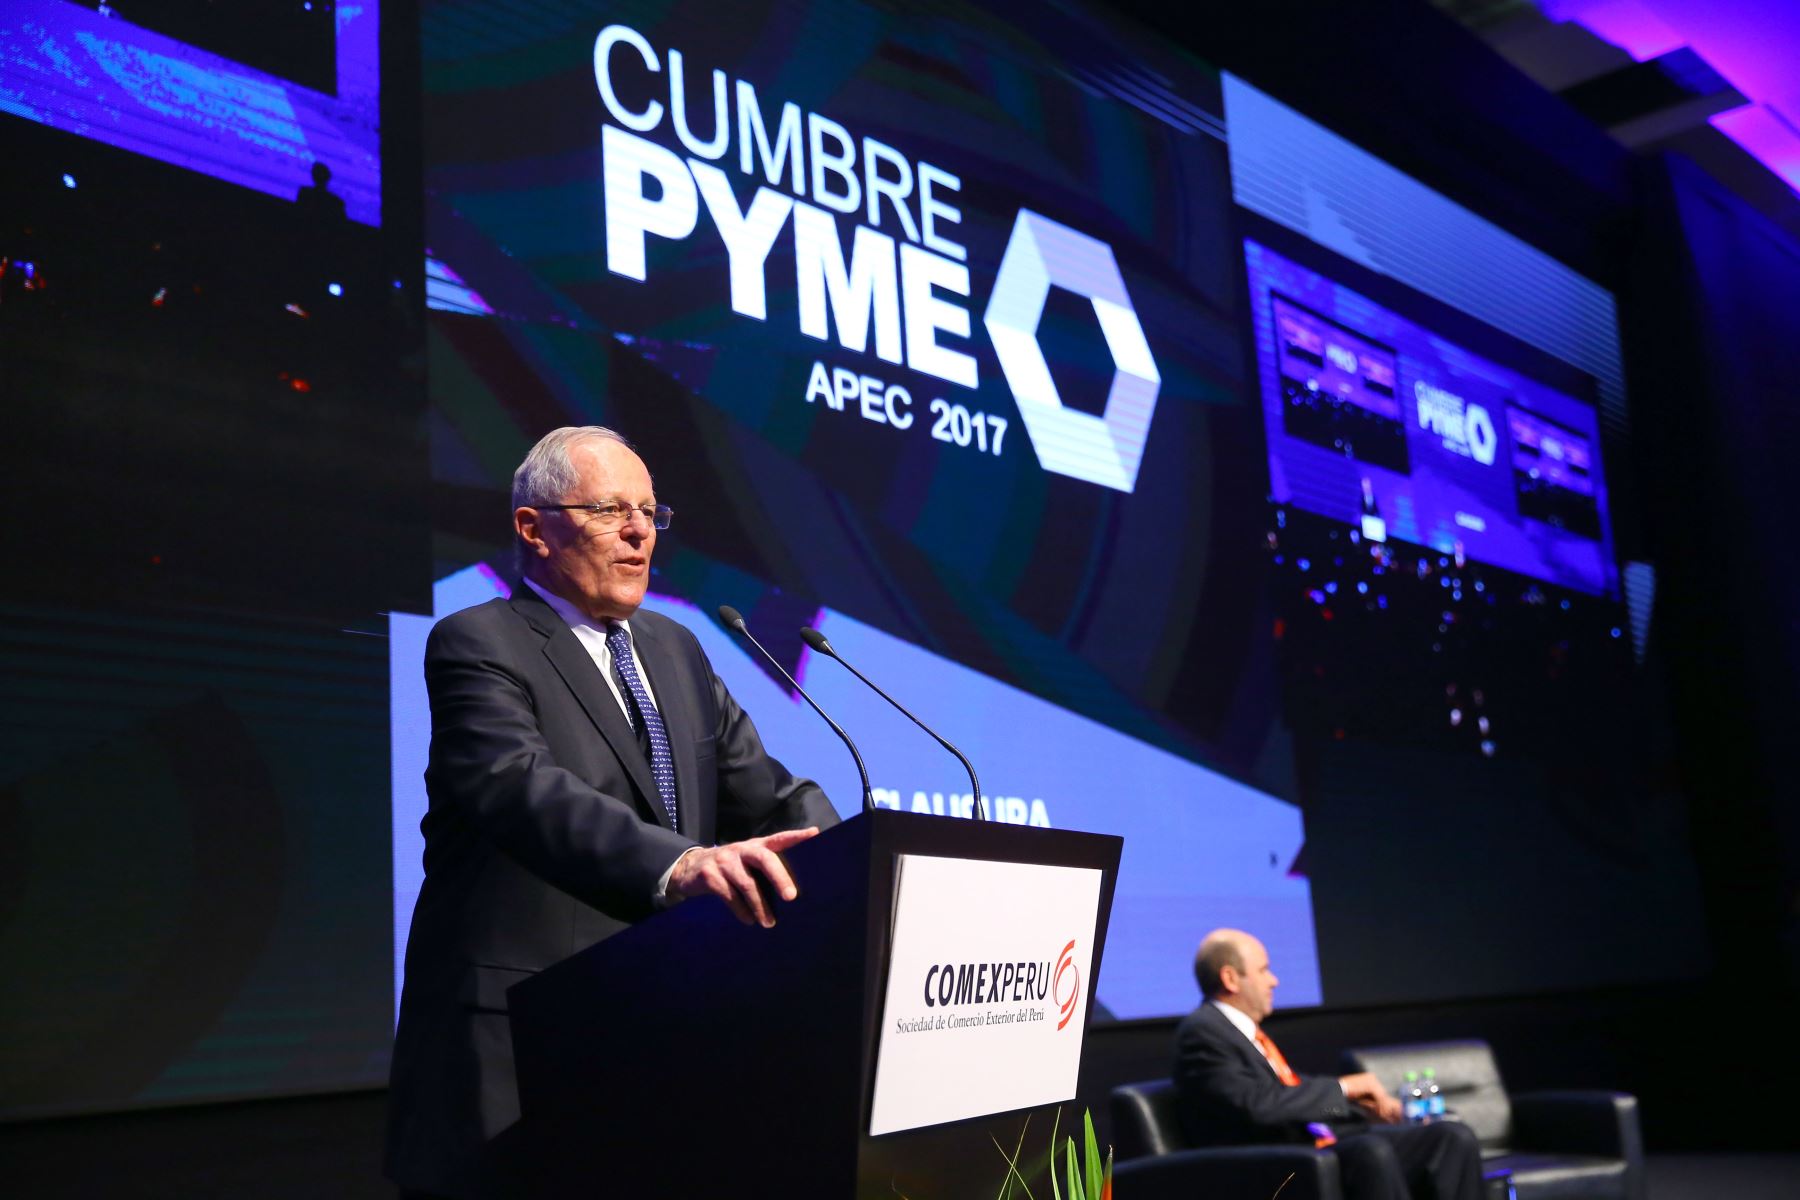 Jefe del Estado, Pedro Pablo Kuczynski, clausuró la X Cumbre Pyme APEC 2017.